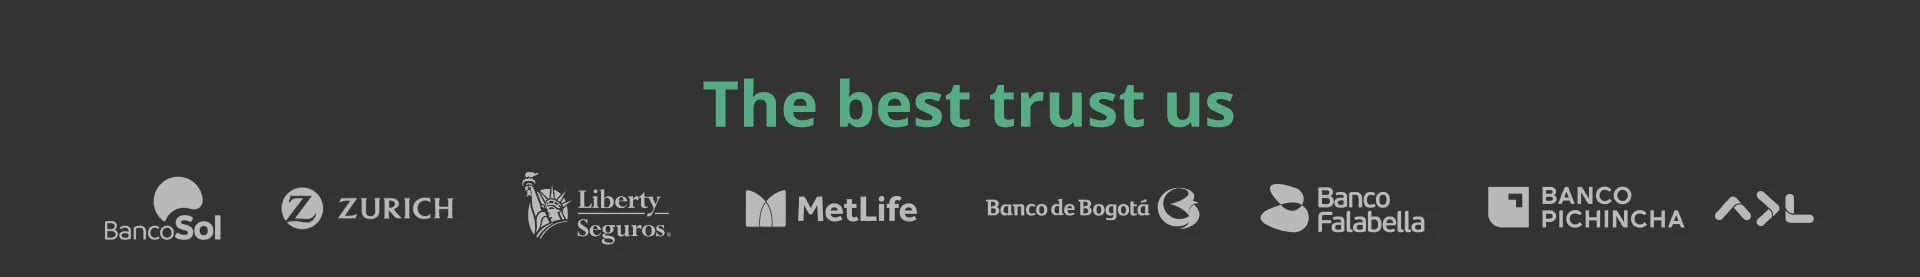 the-best-trust-us